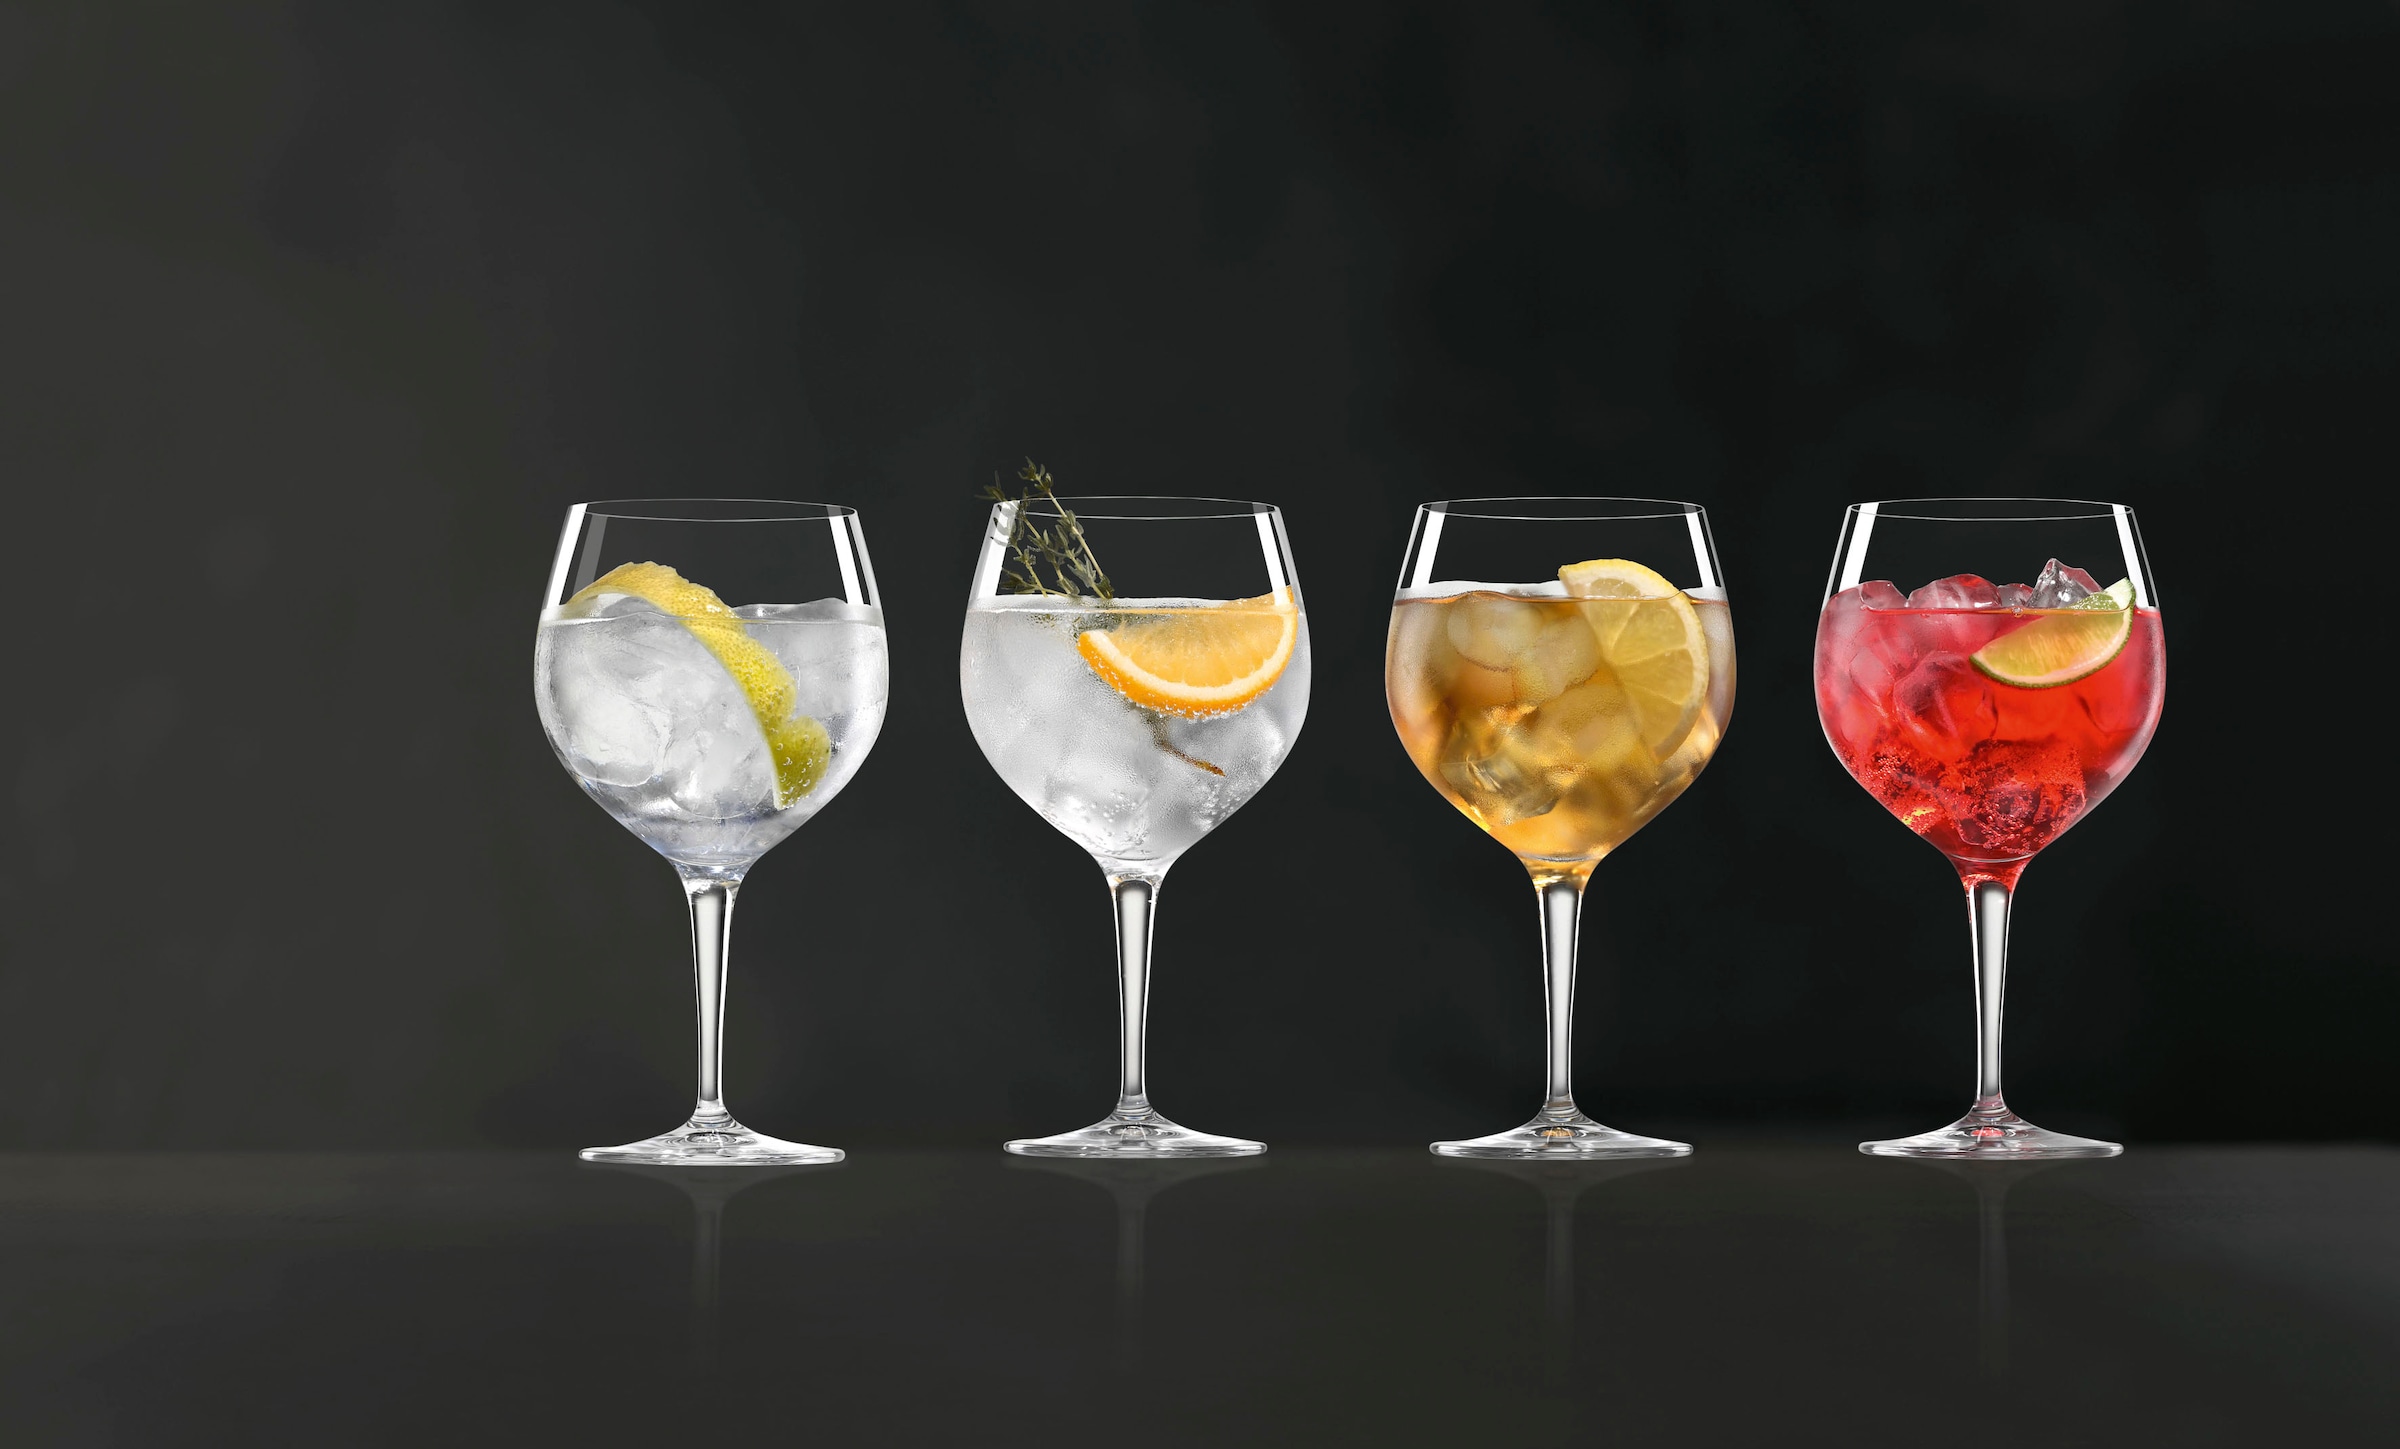 SPIEGELAU Cocktailglas »Special Glasses«, (Set, 4 tlg., Set bestehend aus 4 Gläsern), 630 ml, 4-teilig